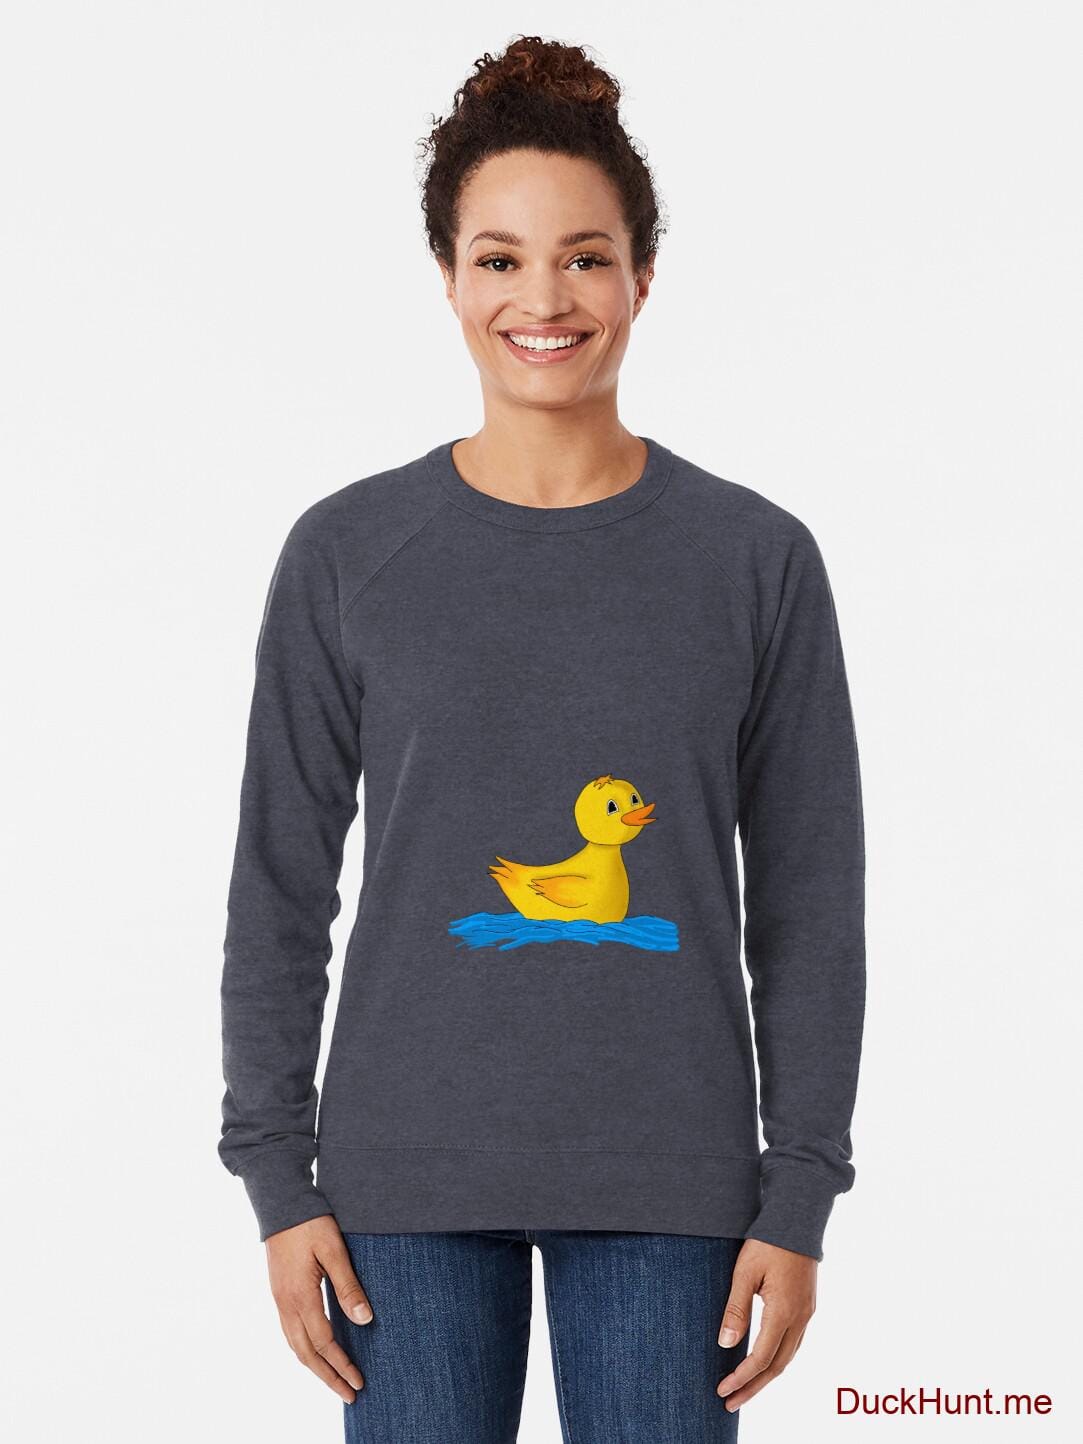 Plastic Duck Denim Lightweight Sweatshirt alternative image 1